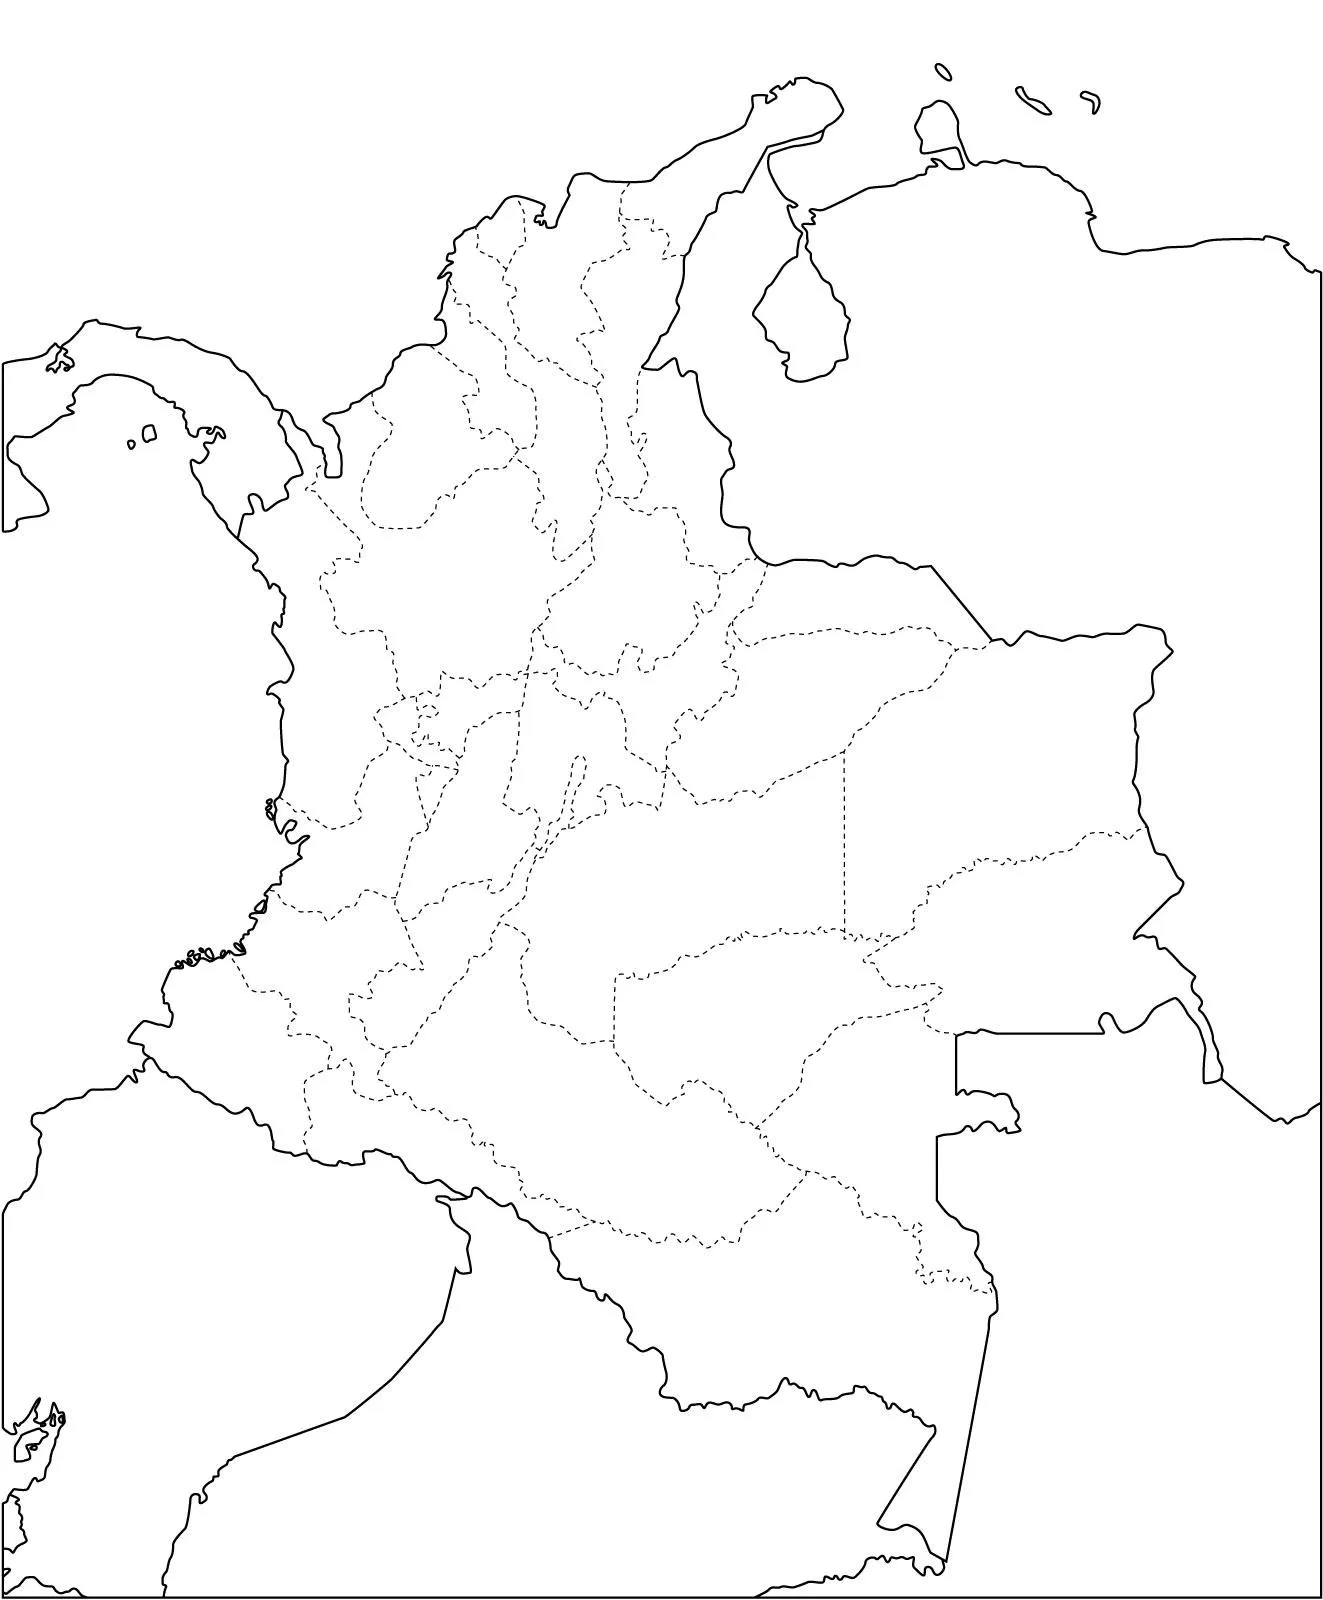 Mapa político mudo de Colombia para imprimir Mapa mudo de ...